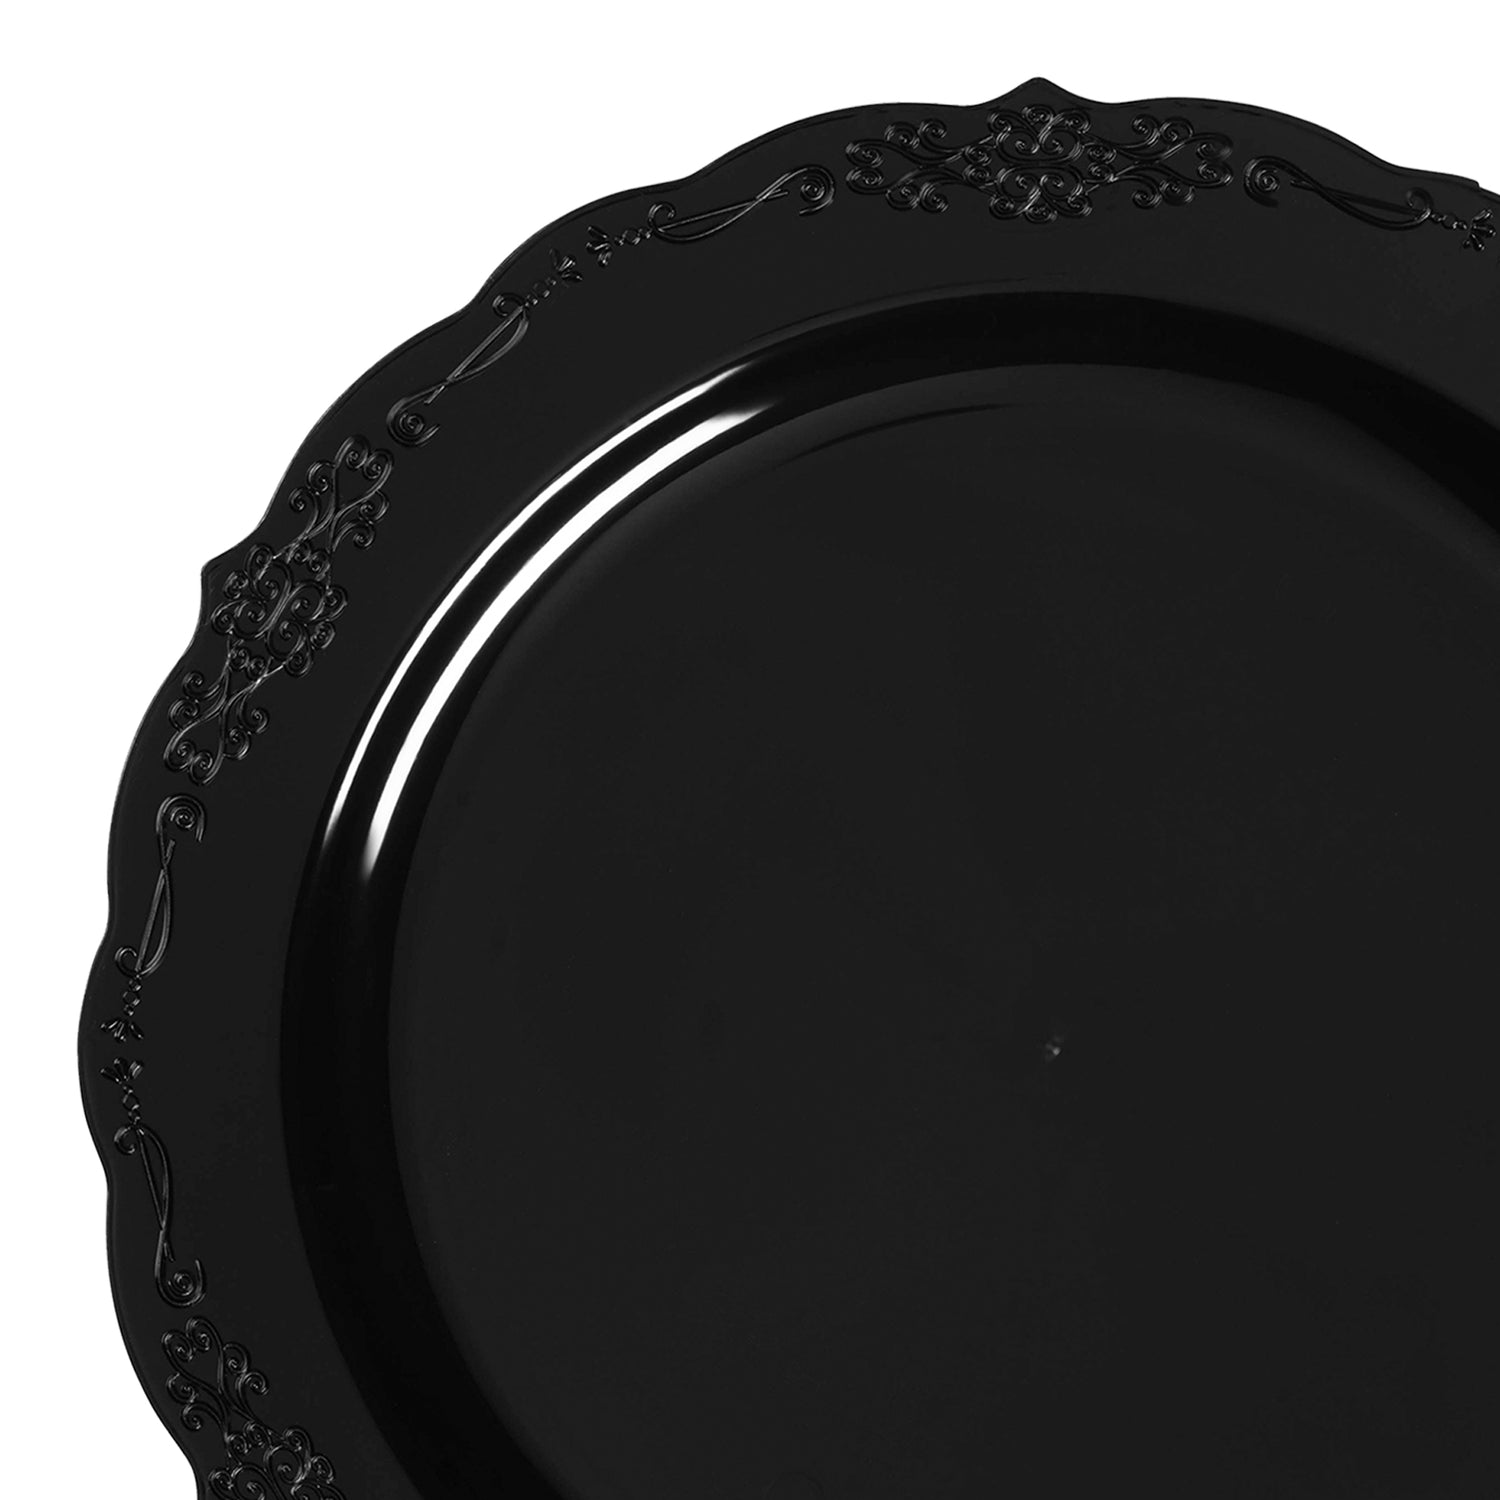 Black Vintage Rim Round Disposable Plastic Appetizer/Salad Plates (7.5") | The Kaya Collection